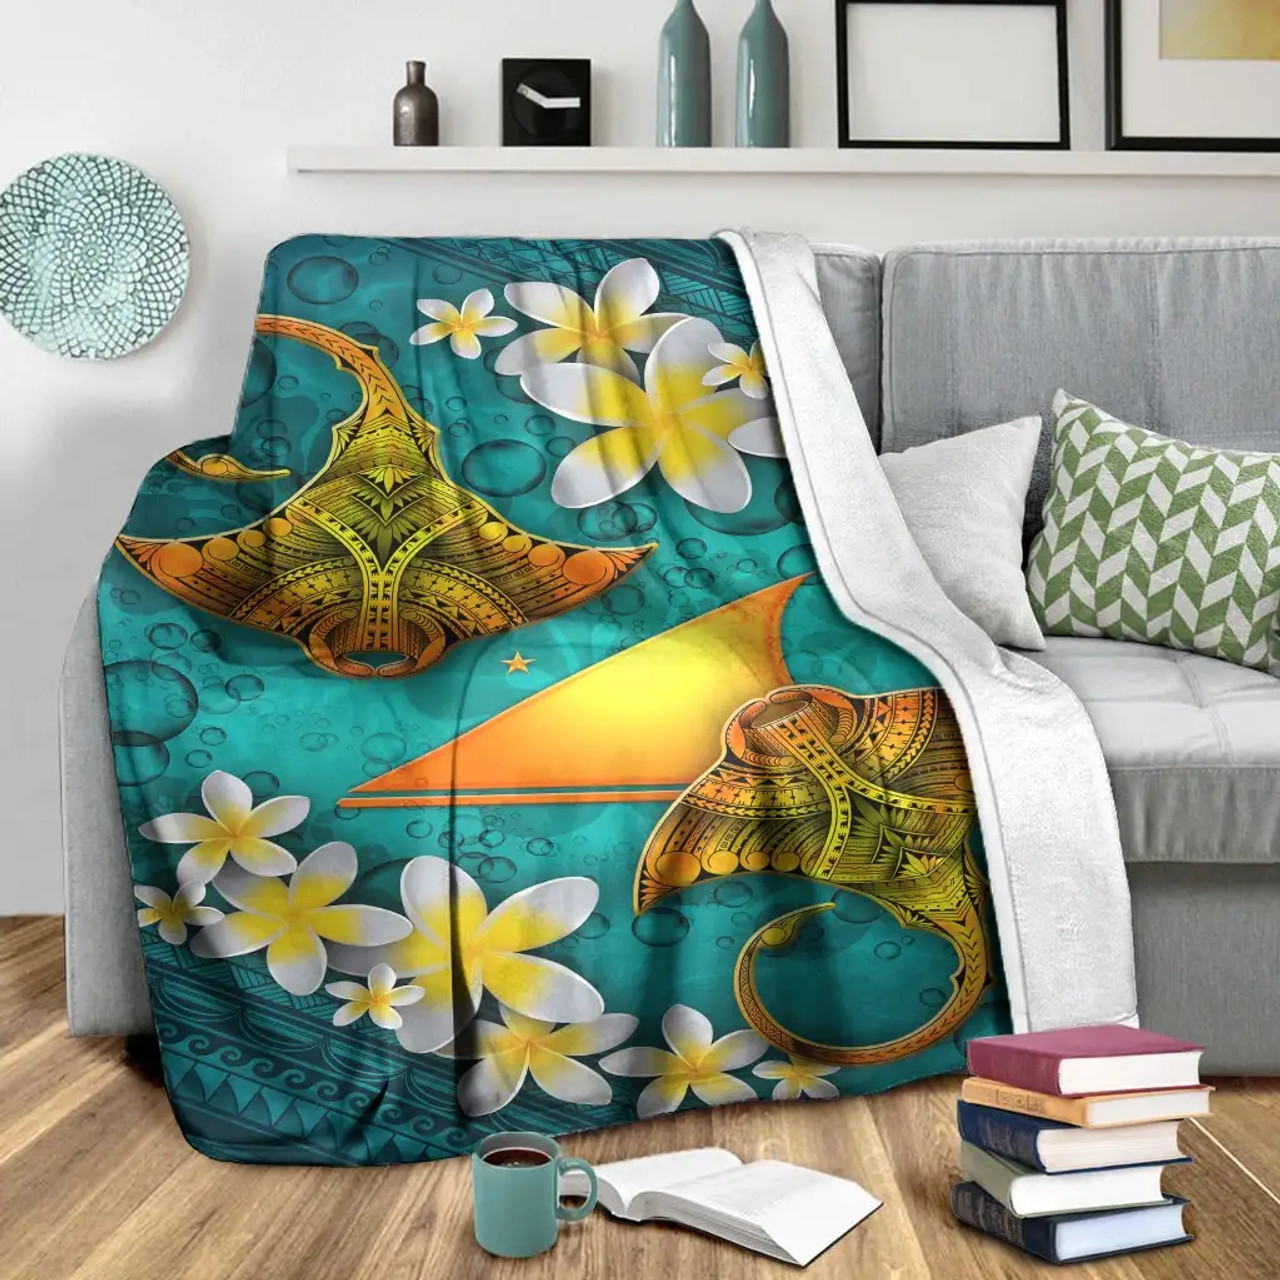 Tokelau Polynesian Blanket - Manta Ray Ocean 3